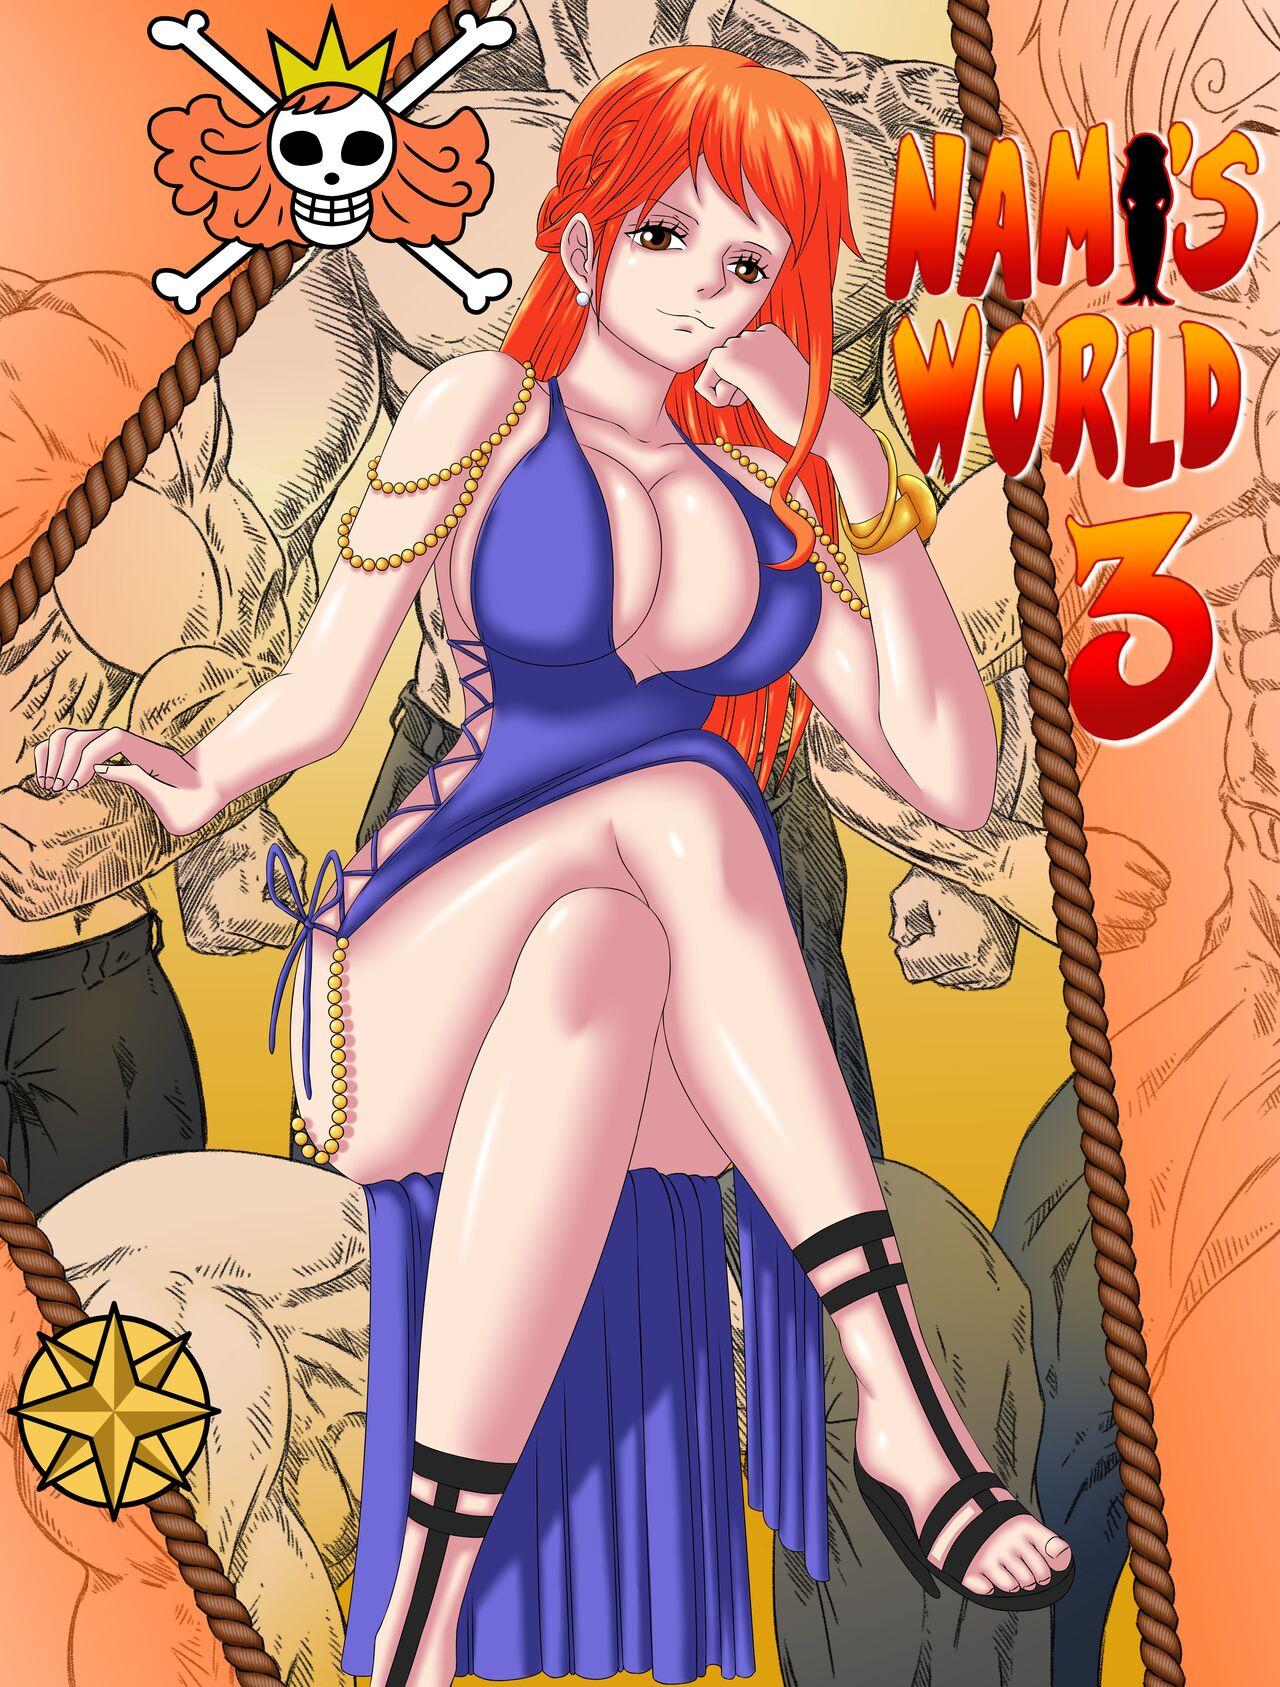 Nami's World 3: Nami's Zou 0